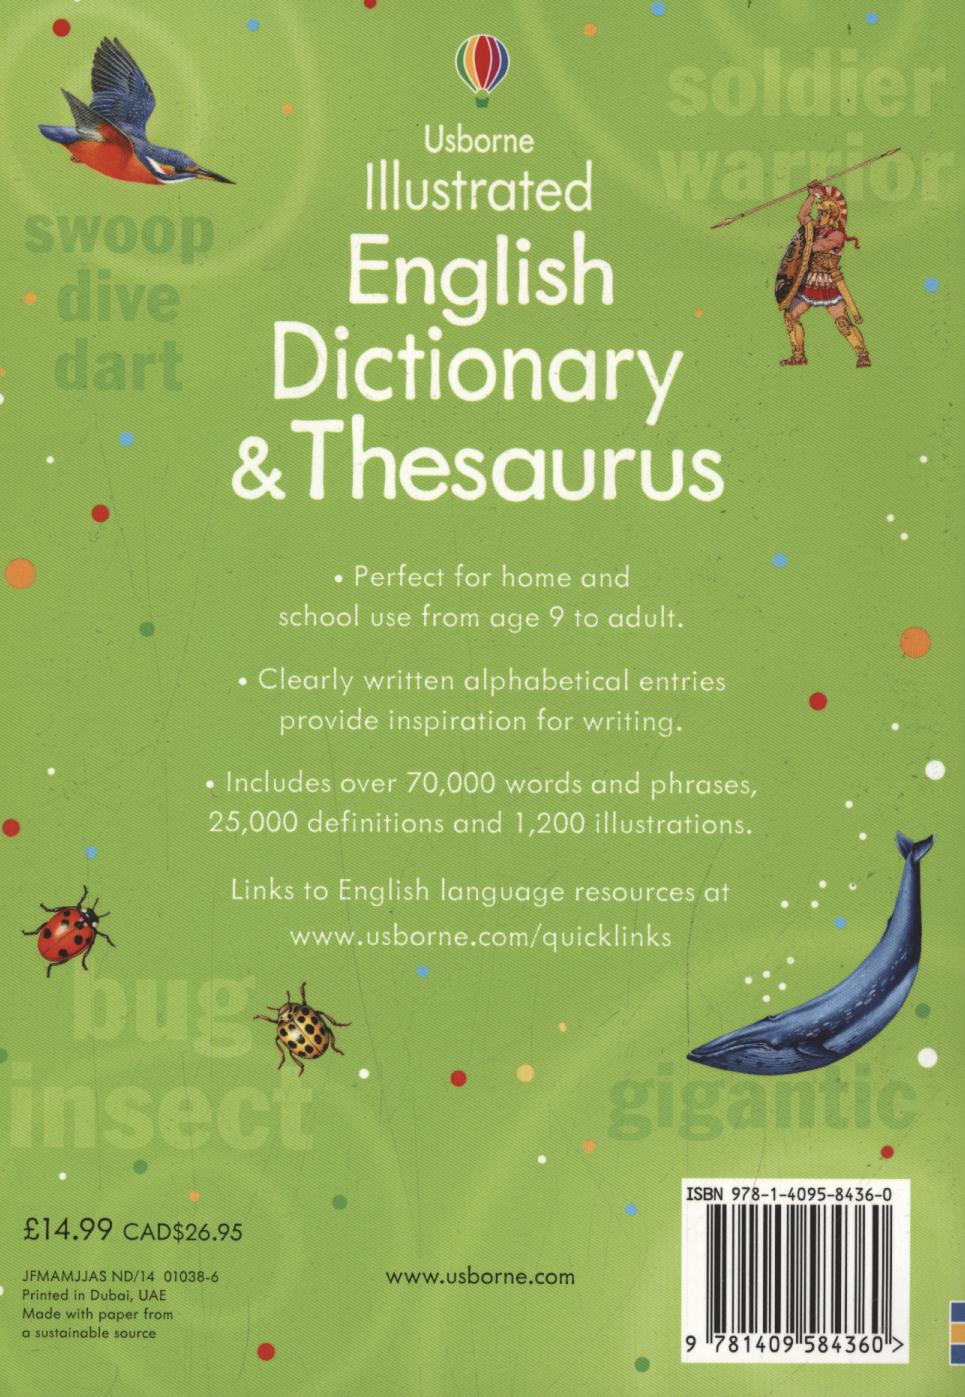 Illustrated English Dictionary & Thesaurus